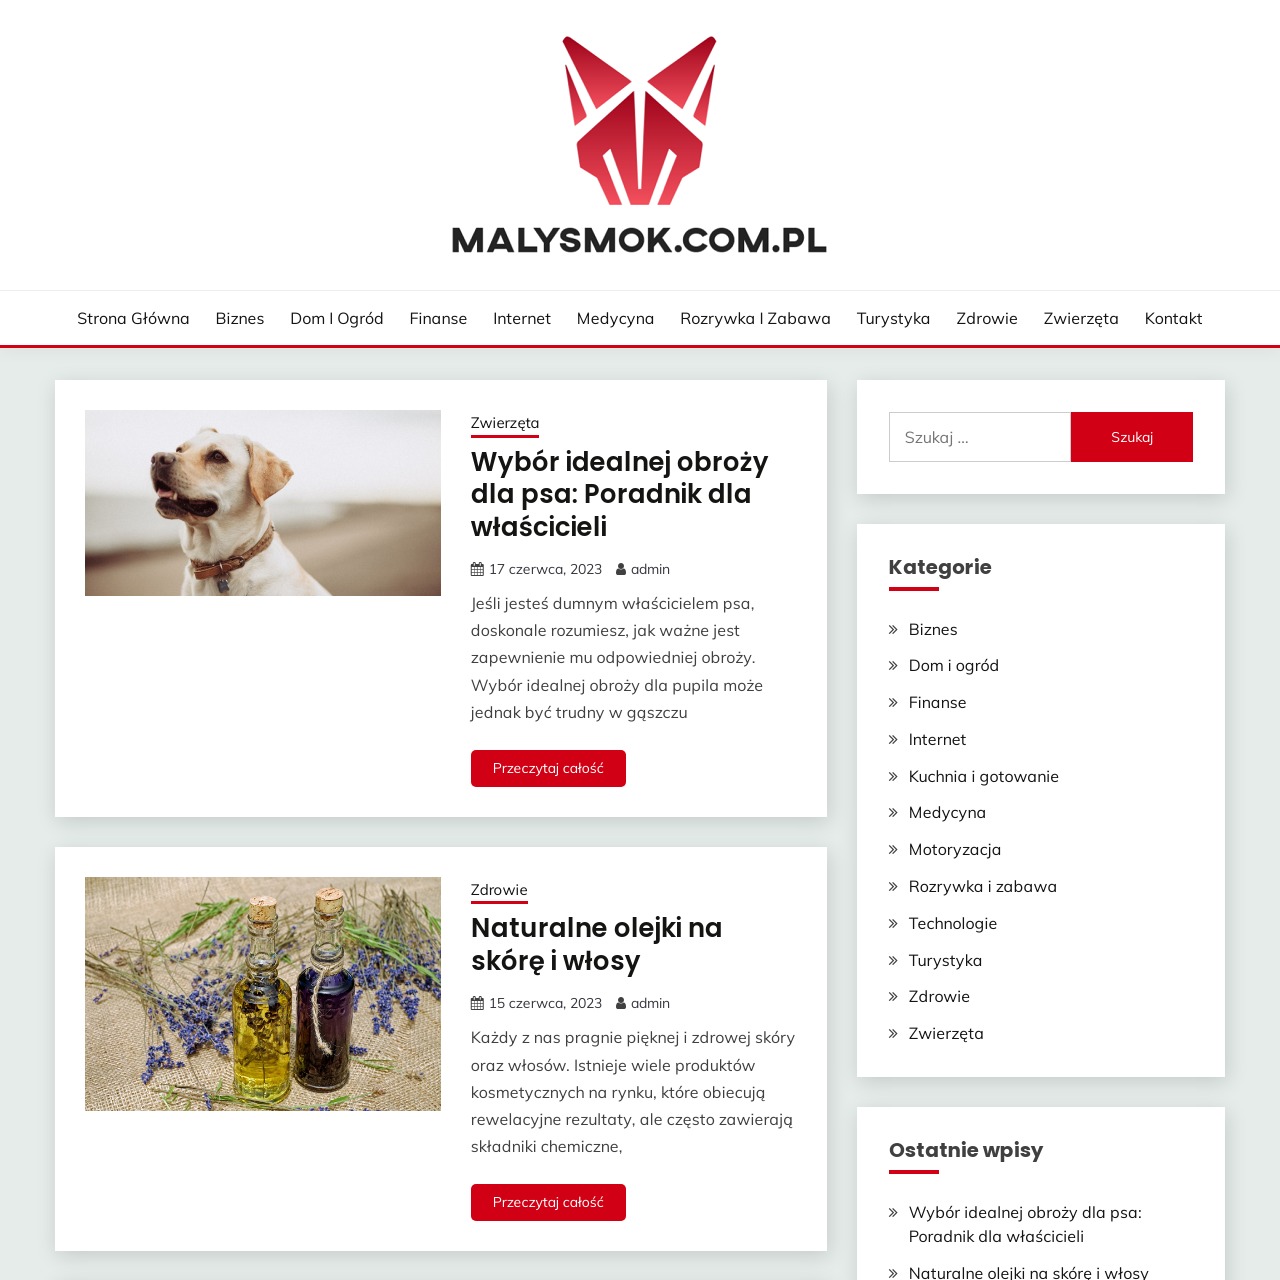 Malysmok.com.pl